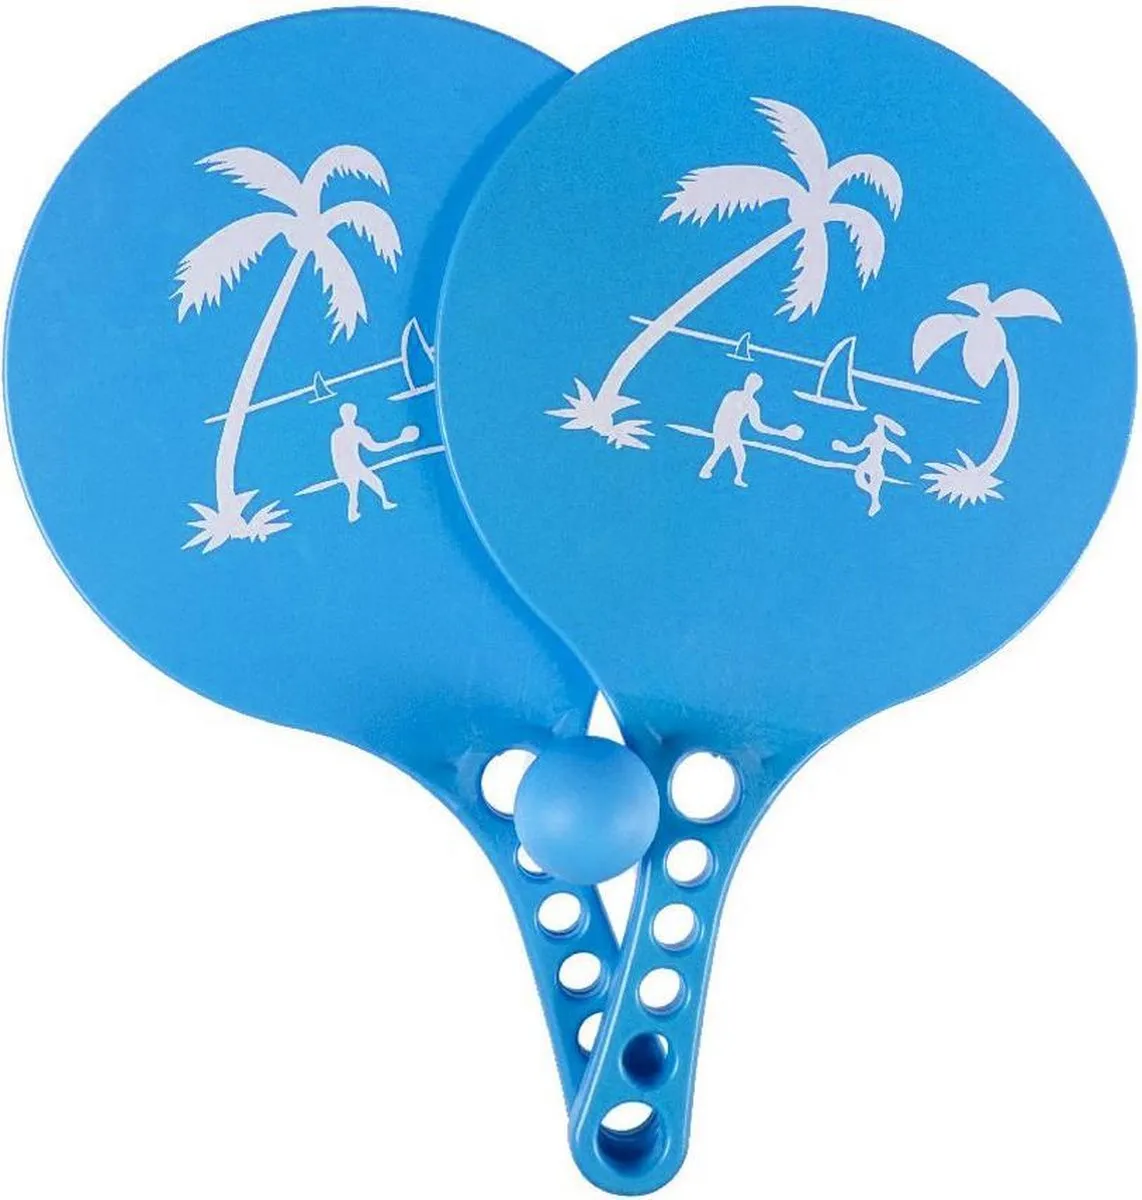 Kunststof beachball set blauw - Strand balletjes - Rackets/batjes en bal - Tennis ballenspel speelgoed